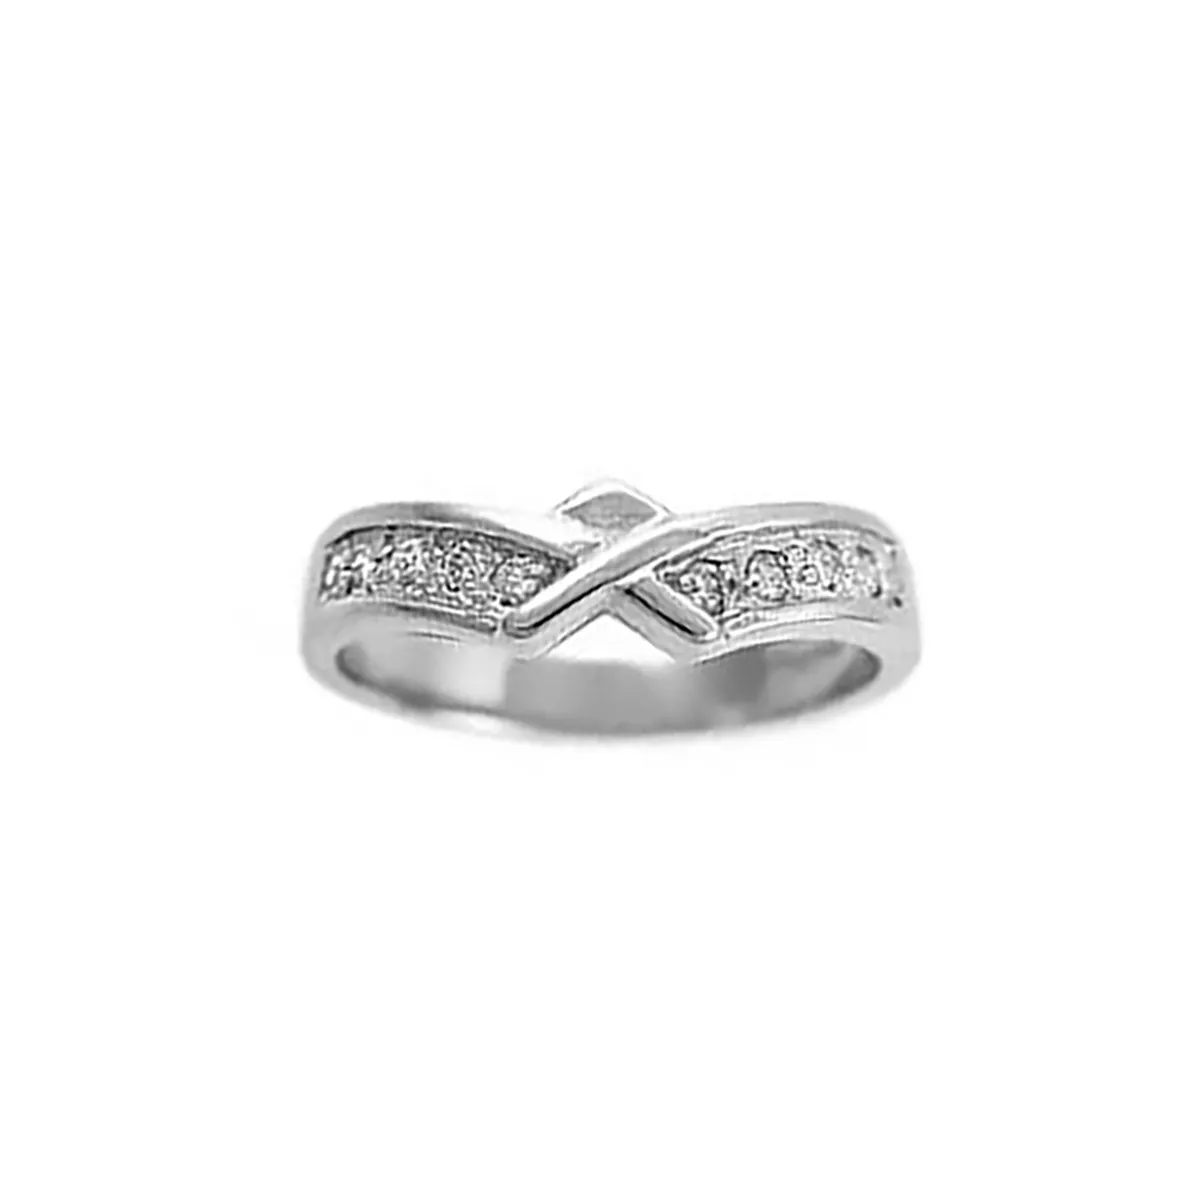 White Gold Celtic Wedding Ring With Brilliant Cut Diamond...